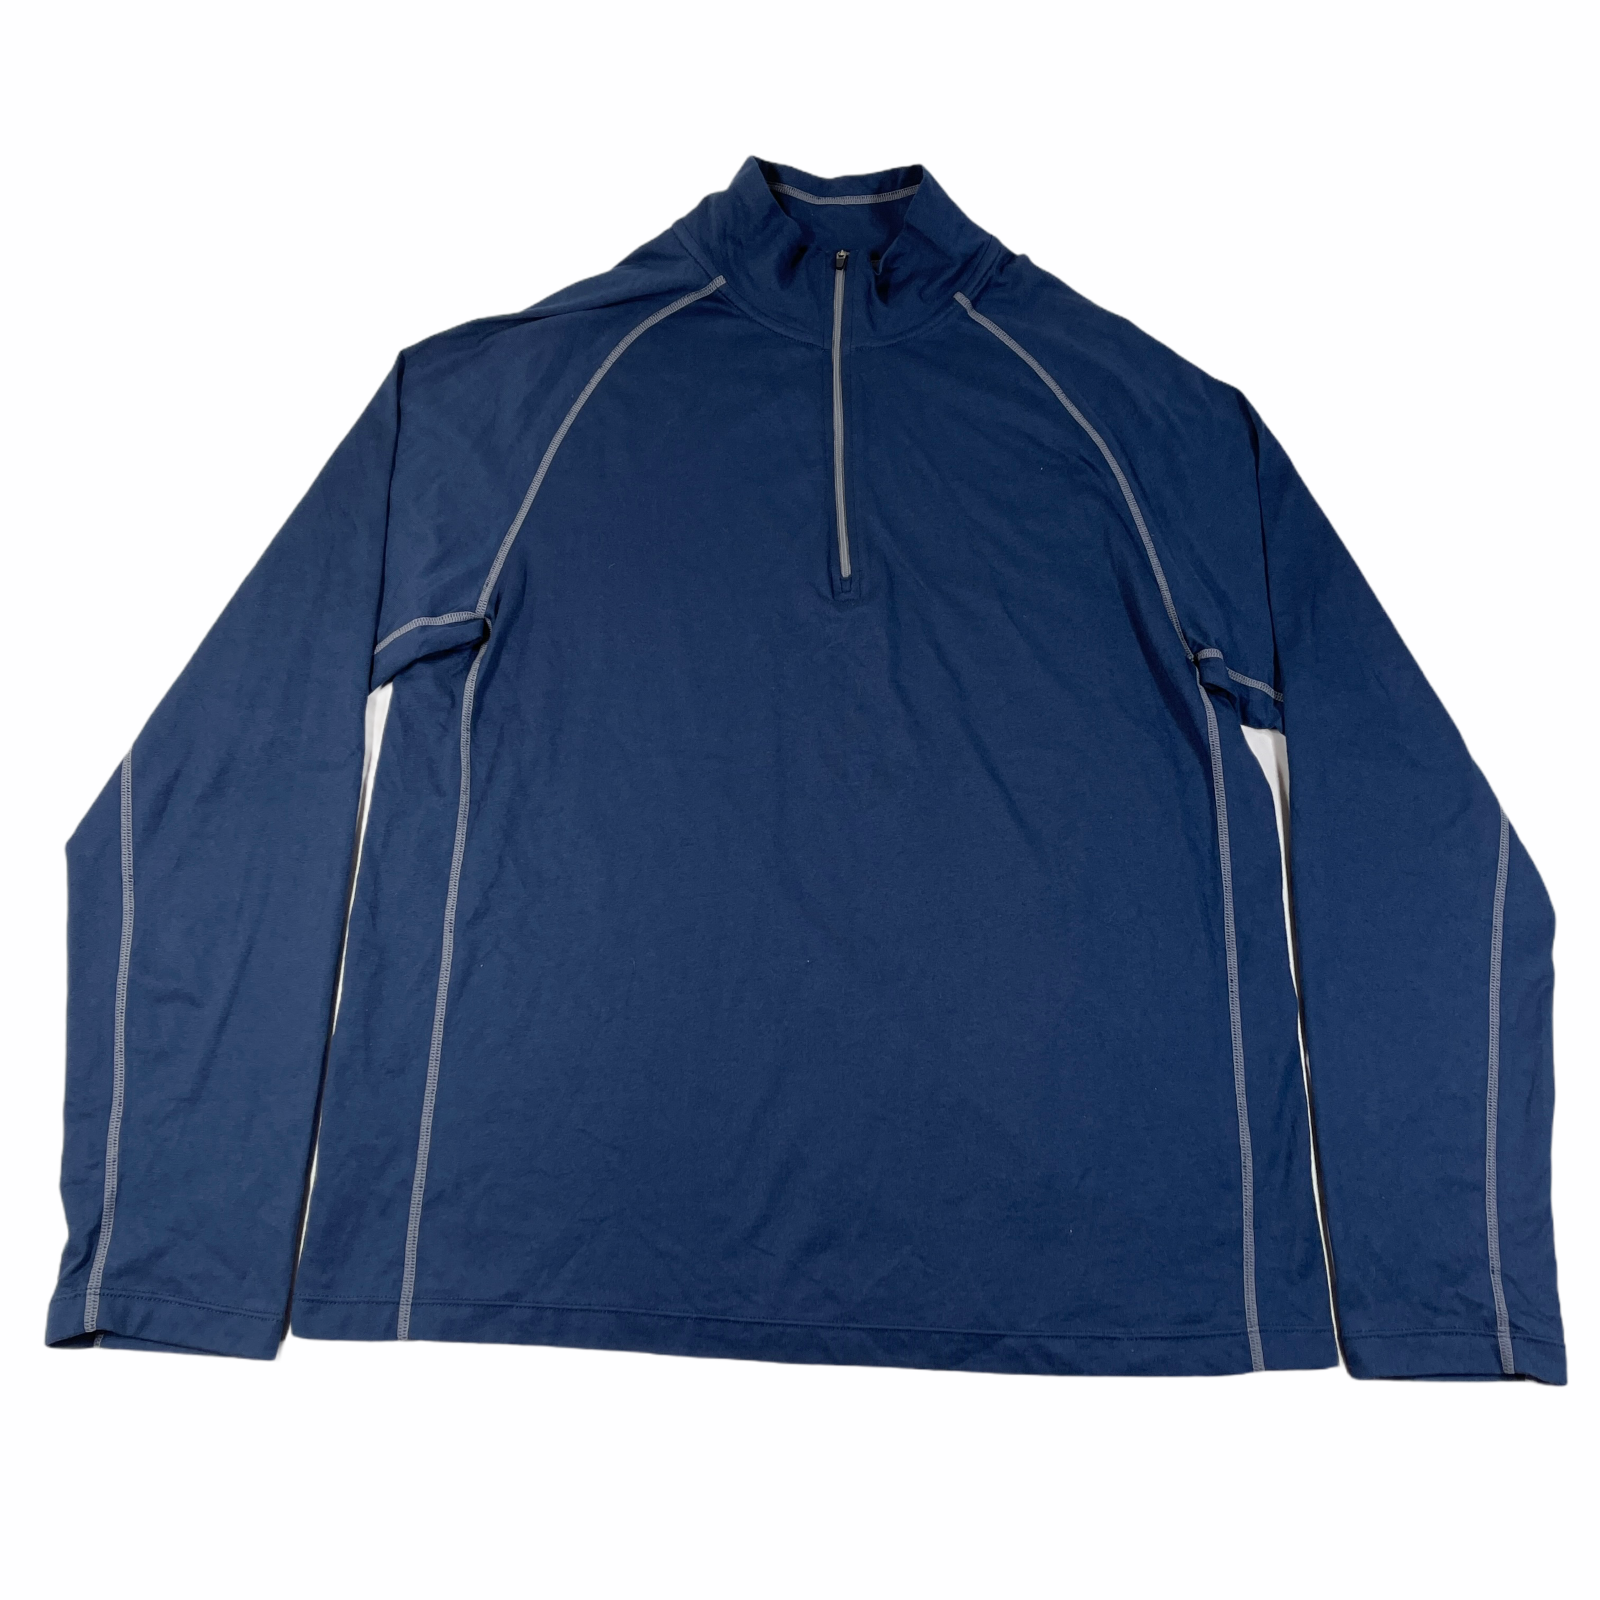 Primary image for Cloudveil 1/4 Zip Sweatshirt Jacket Mens L Dark Blue Exposed Hemlines Mock Neck